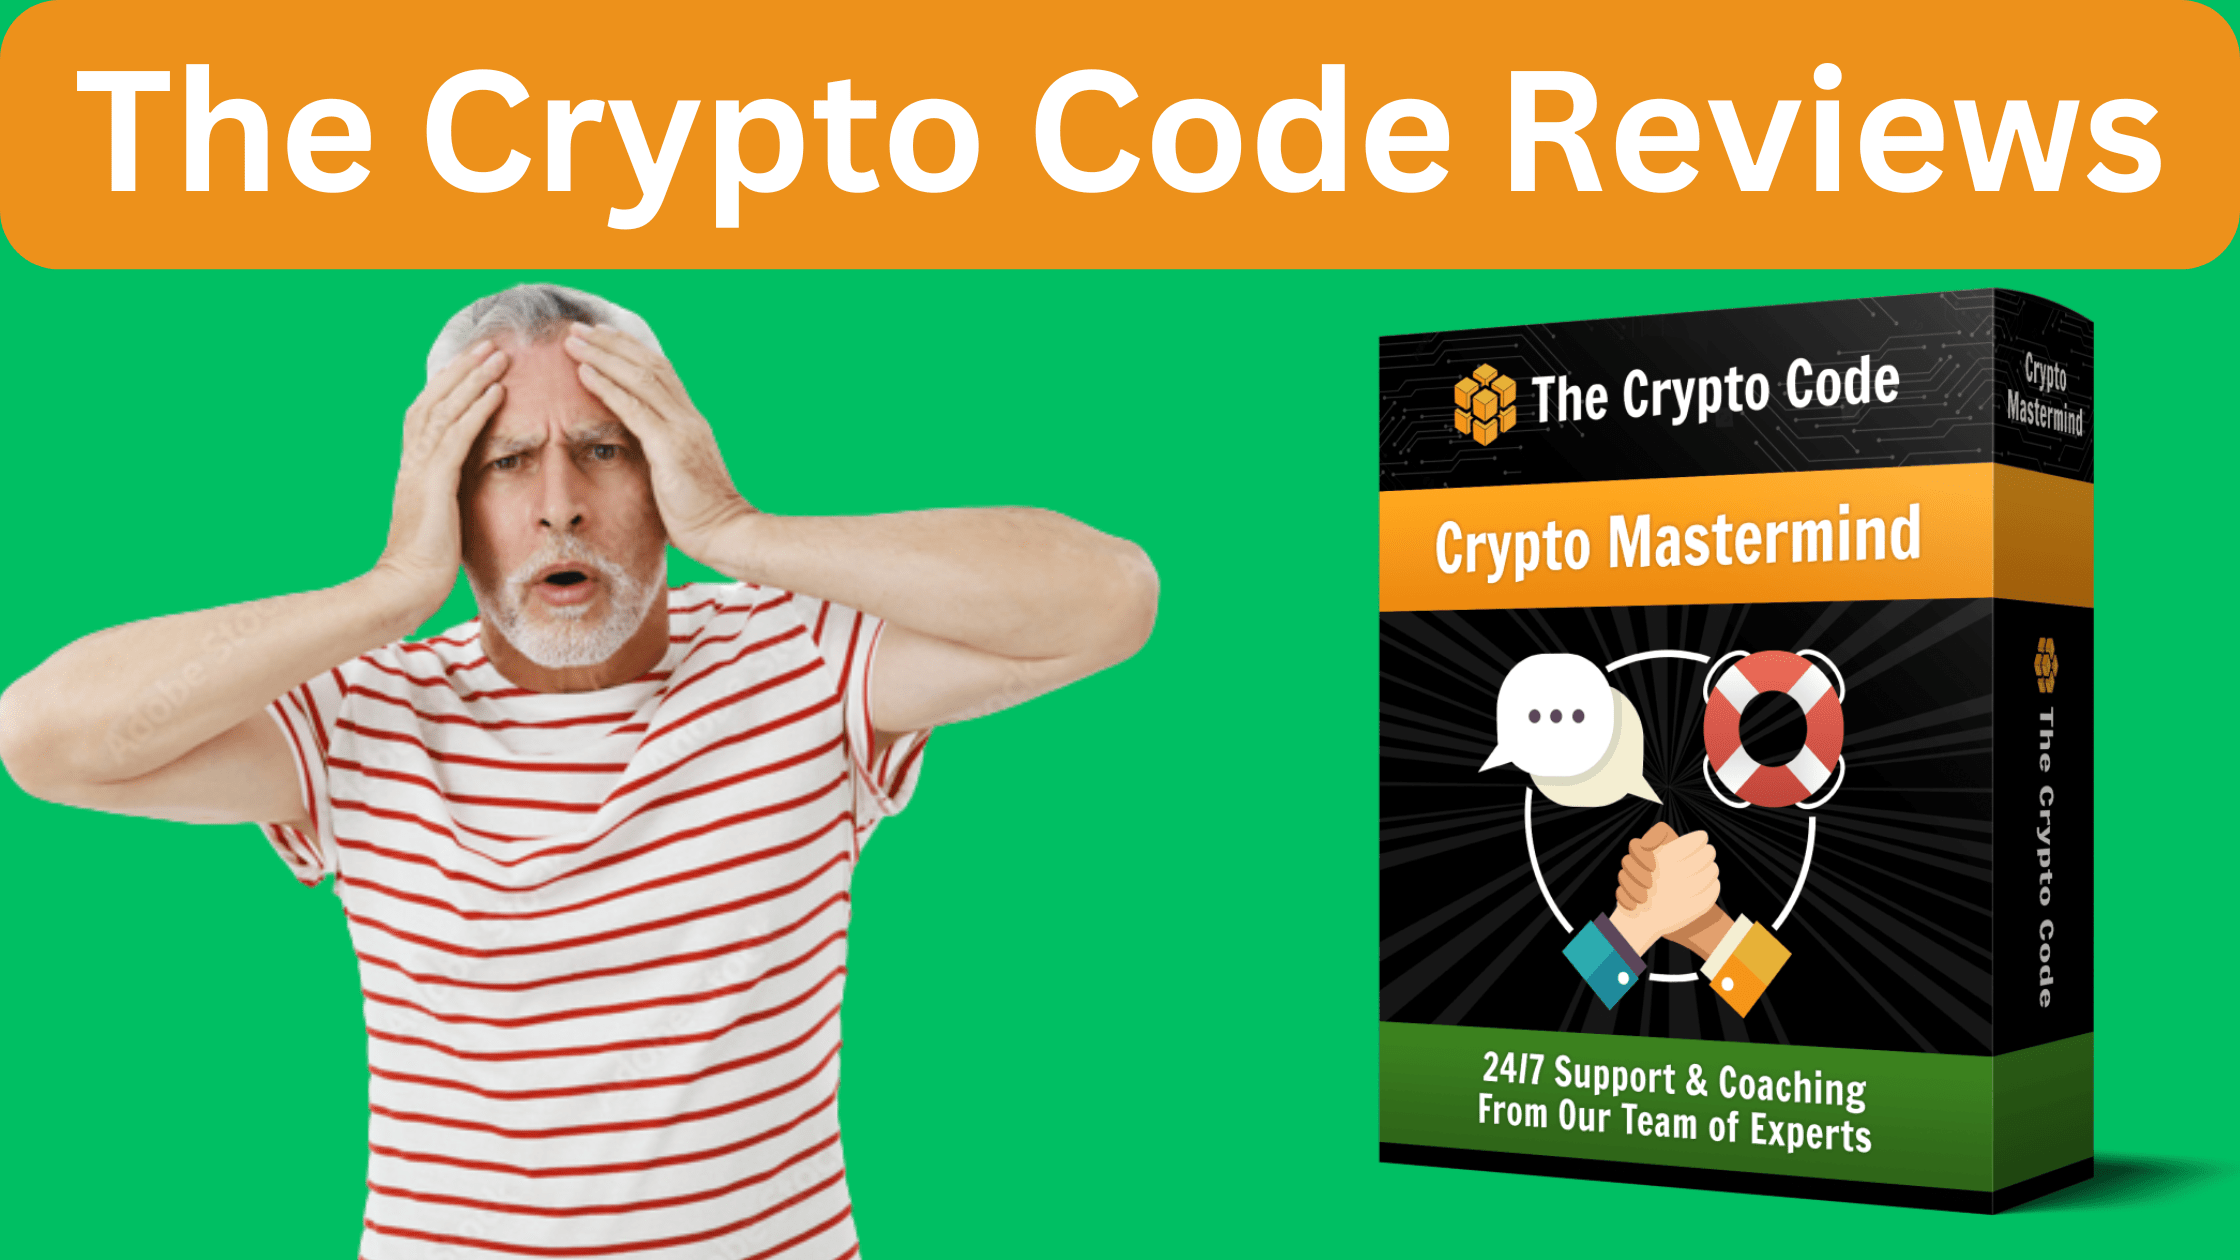 The Crypto Code reviews